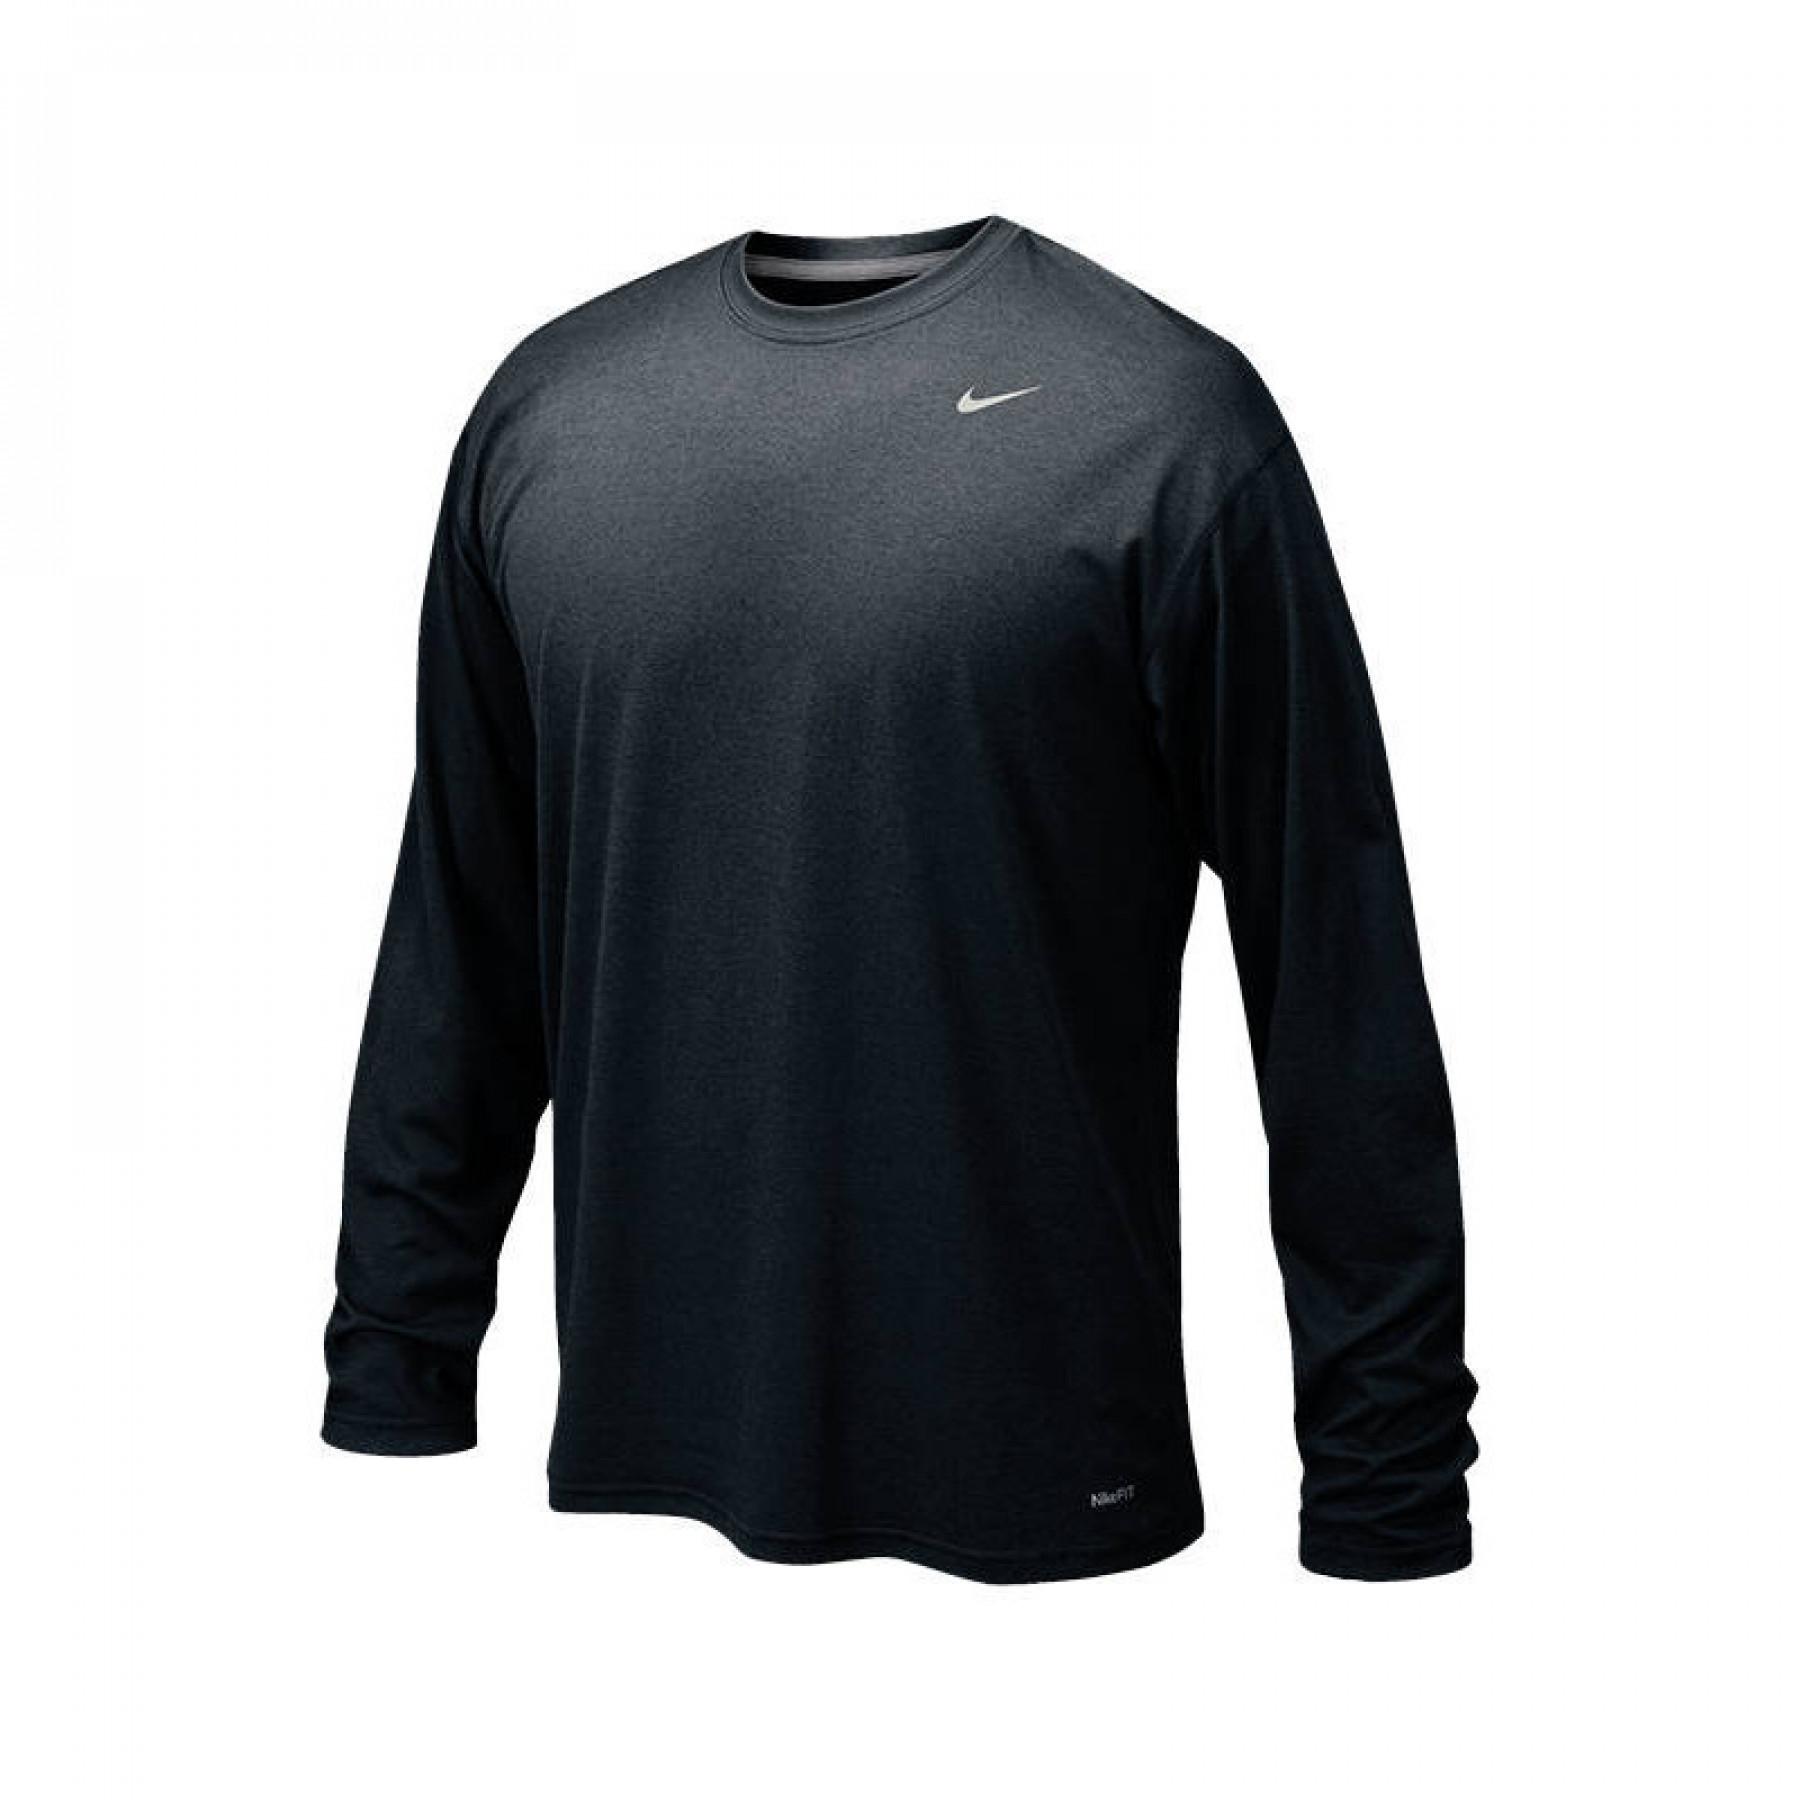 Koszulka dziecięca Nike Legend manches longues